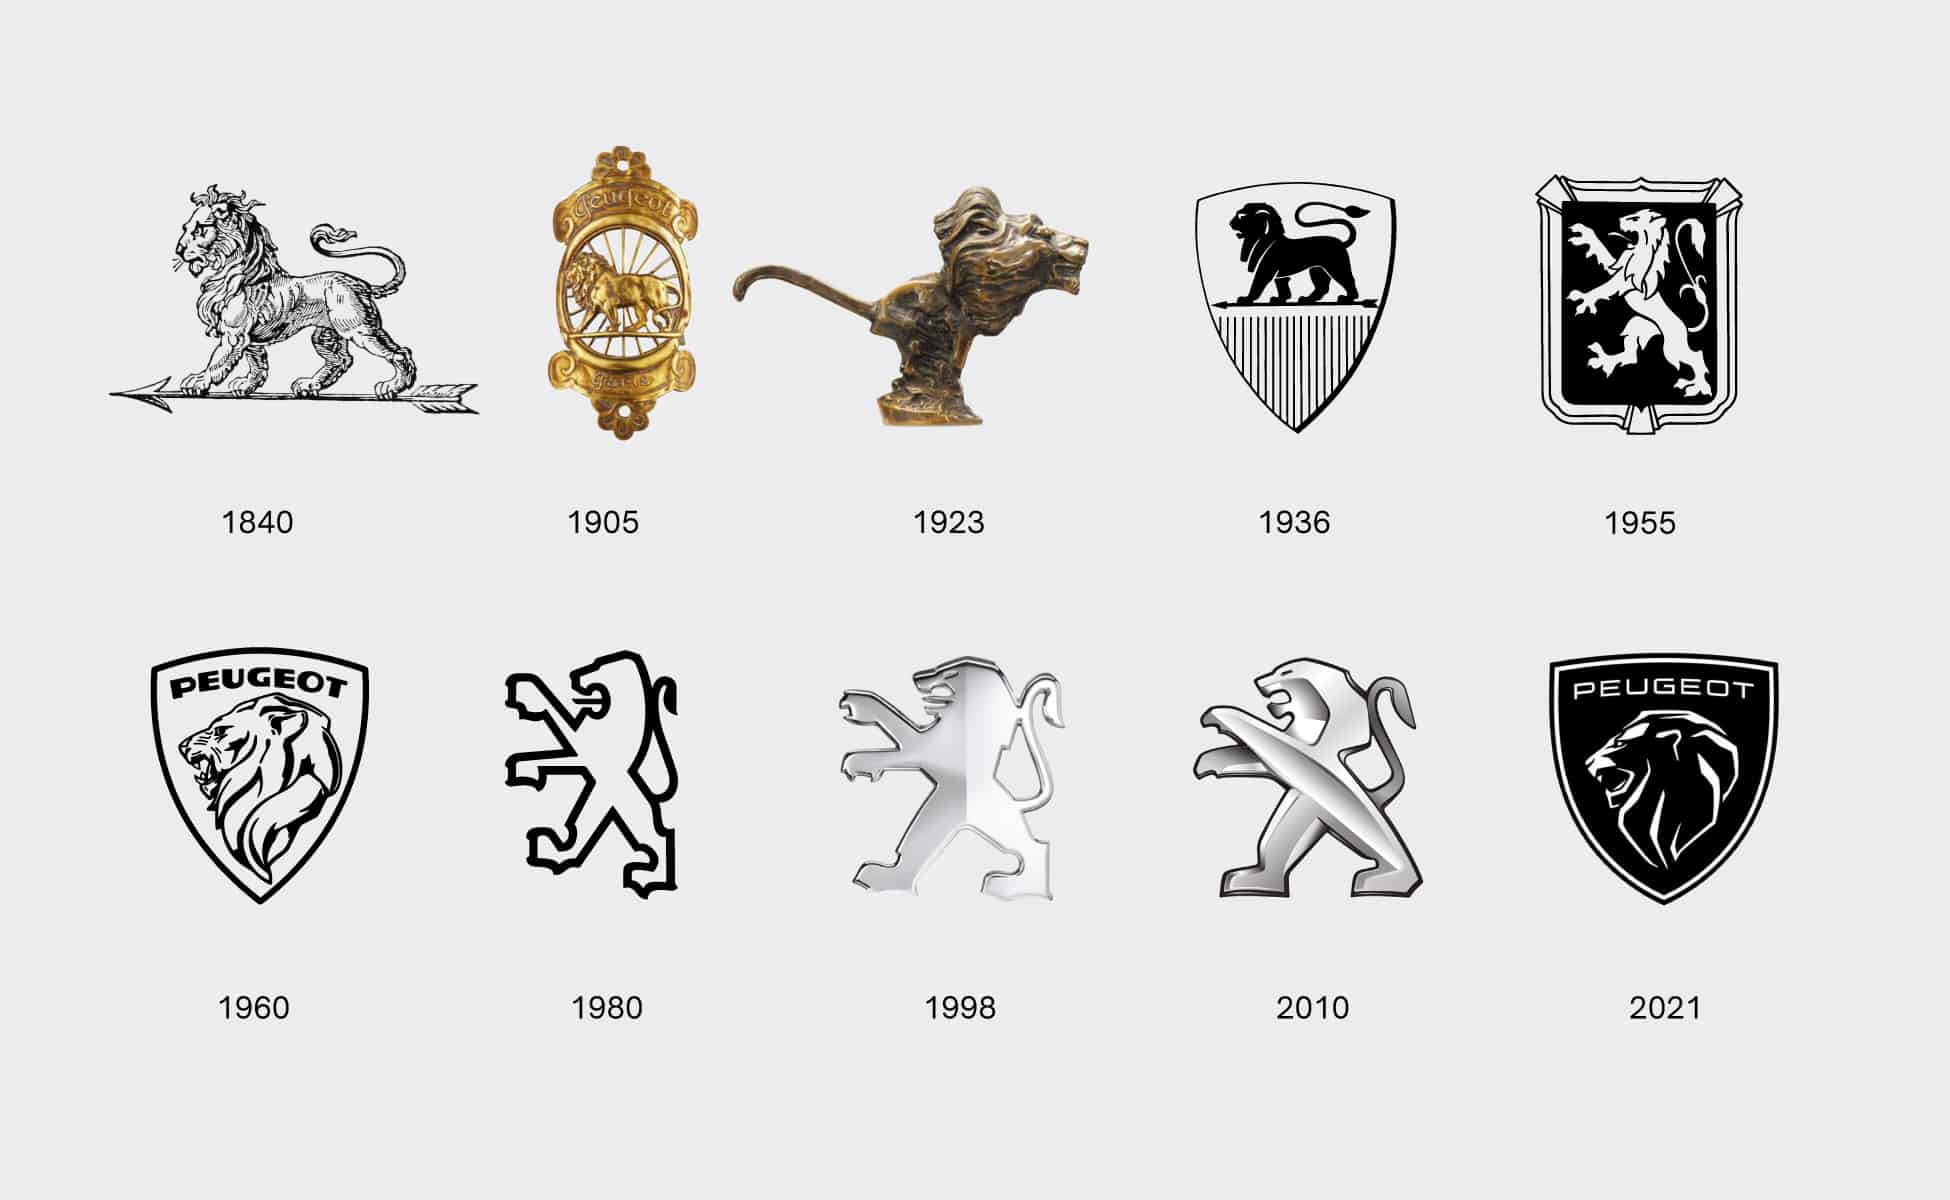 Peugeot logo history